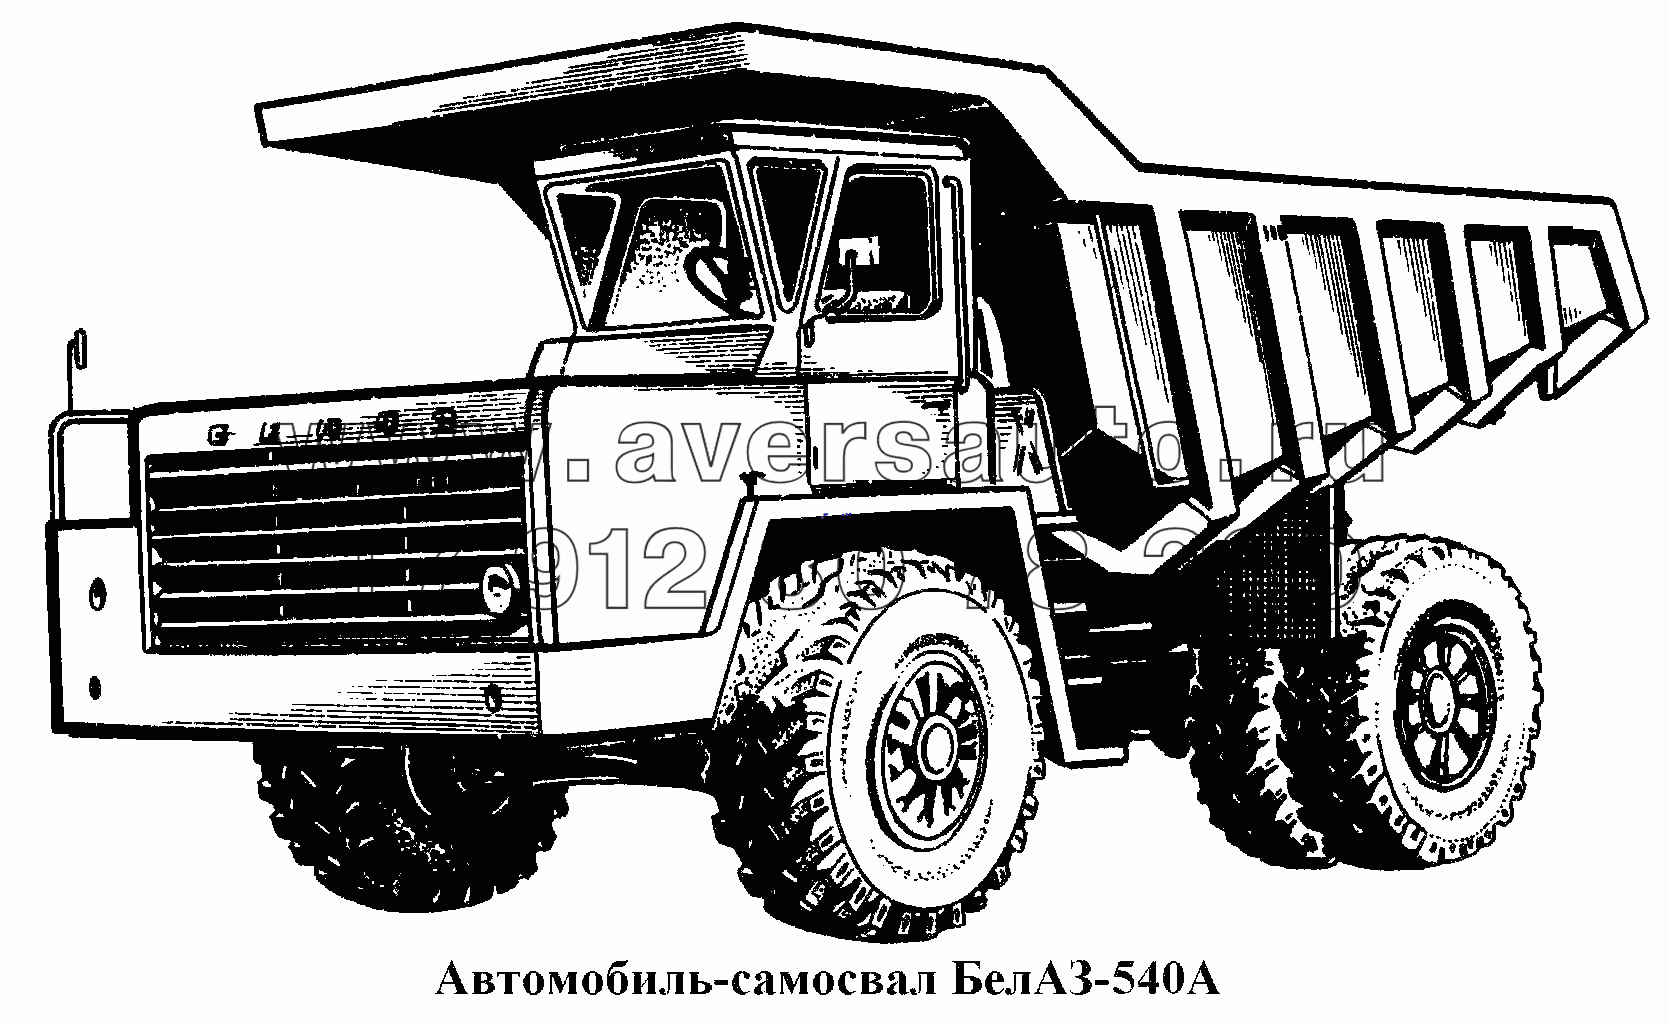 Общий вид автомобиля-самосвала БелАЗ-540А